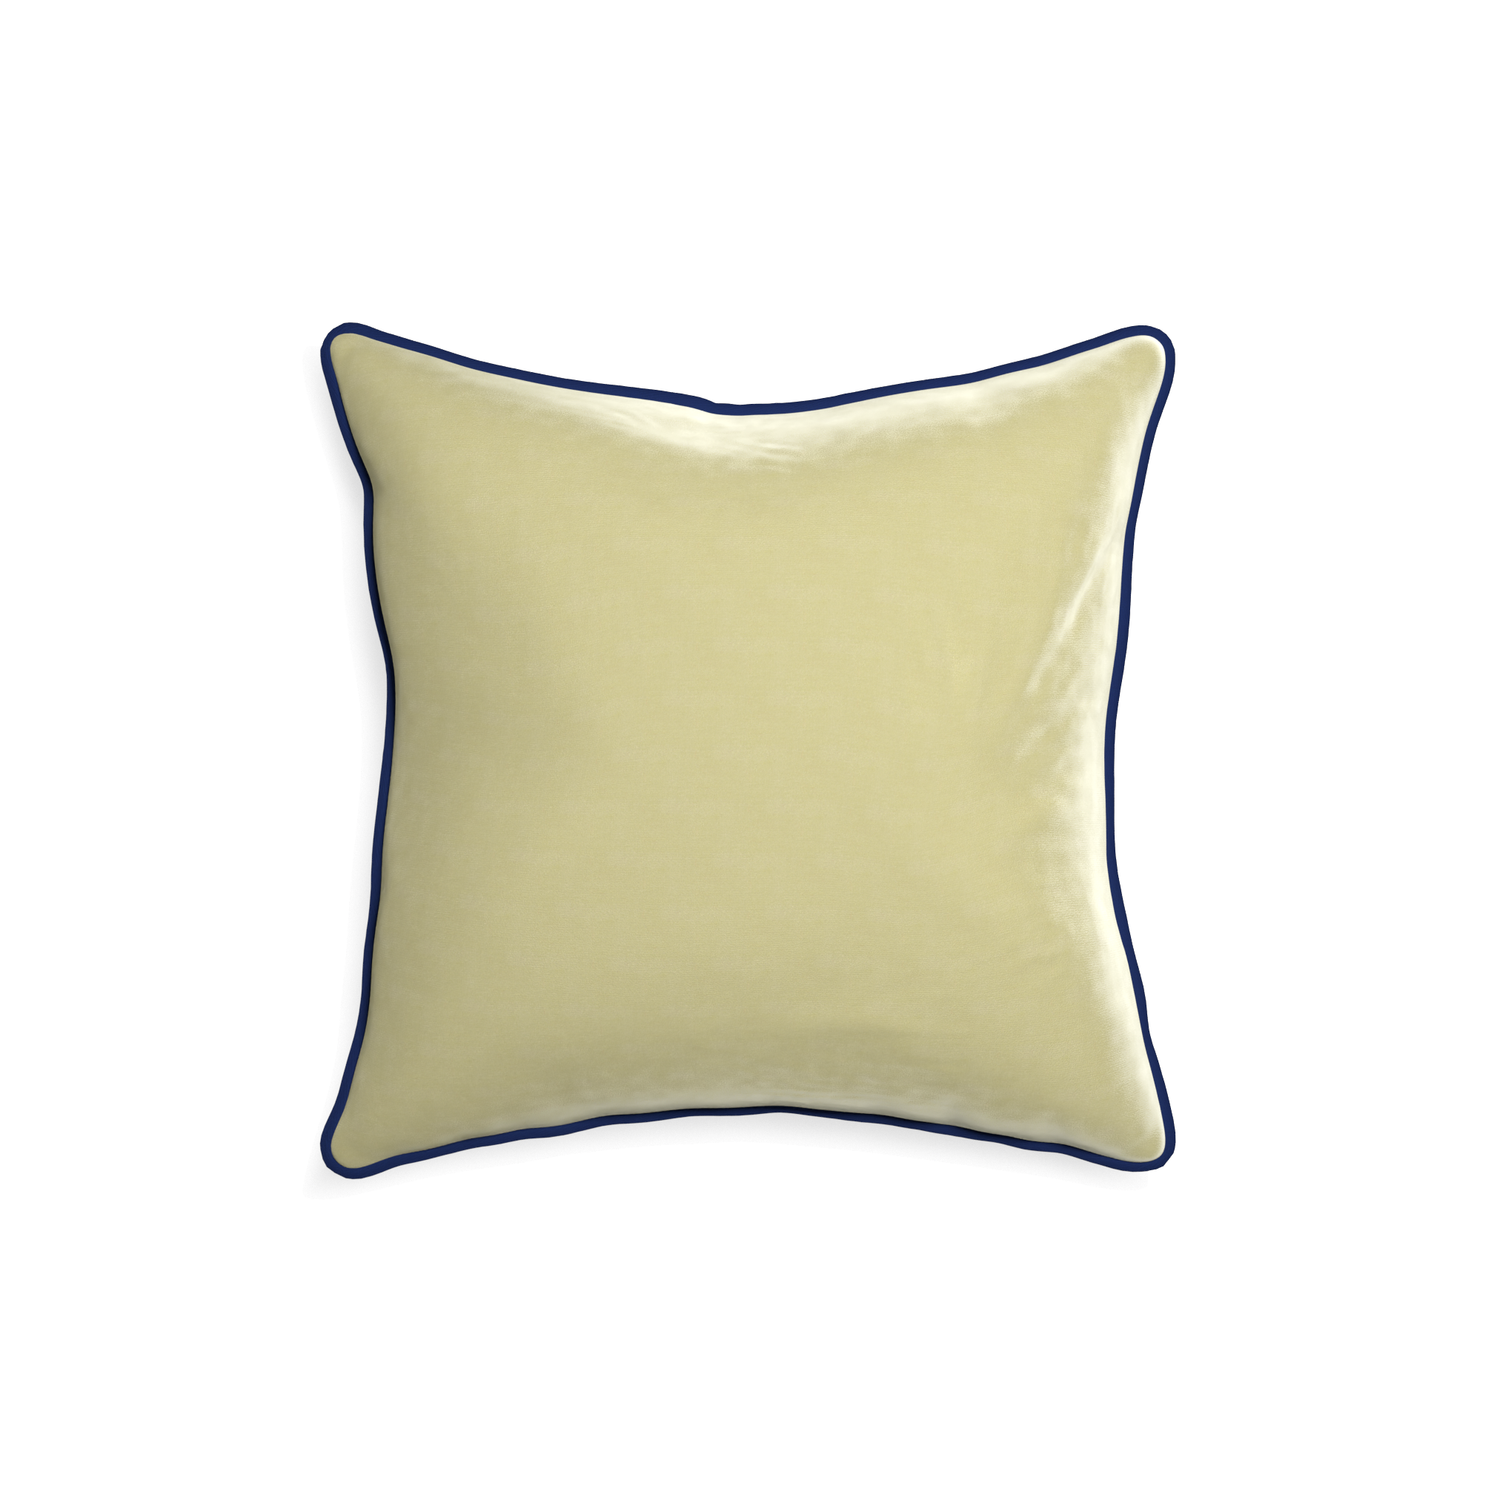 square light green velvet pillow with navy blue piping